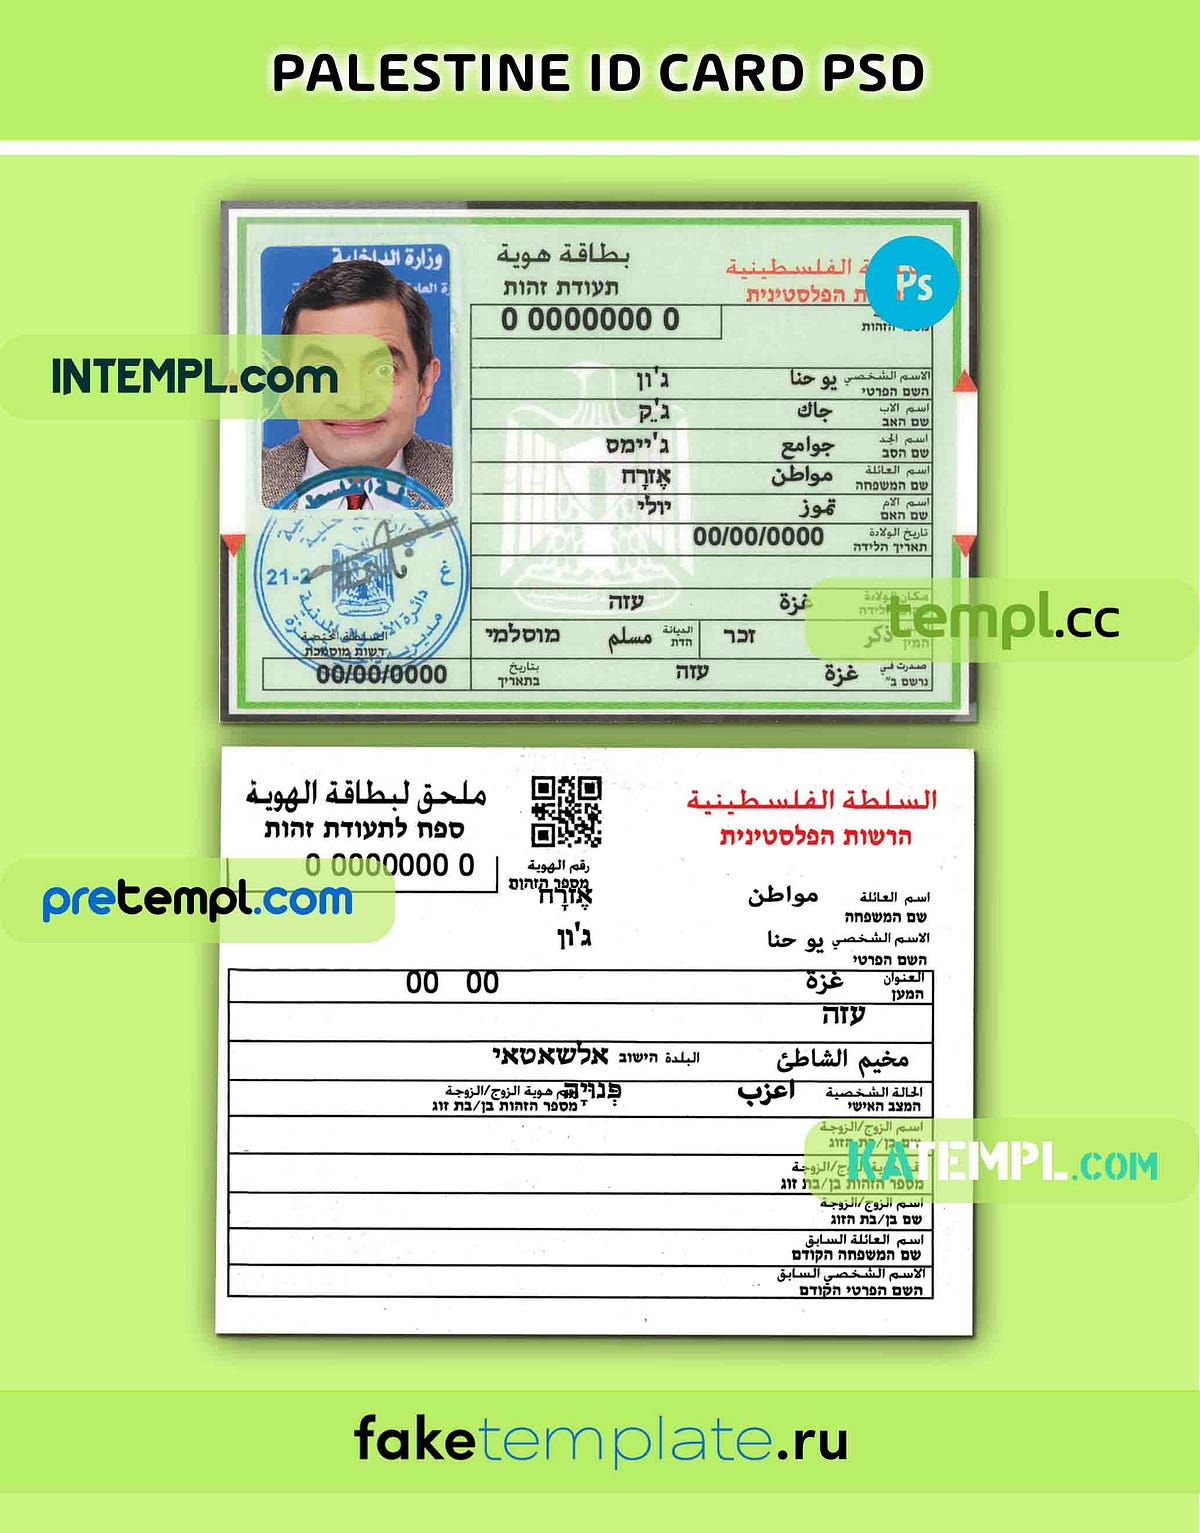 Palestine identity card PSD download template | by Intemplid | Medium